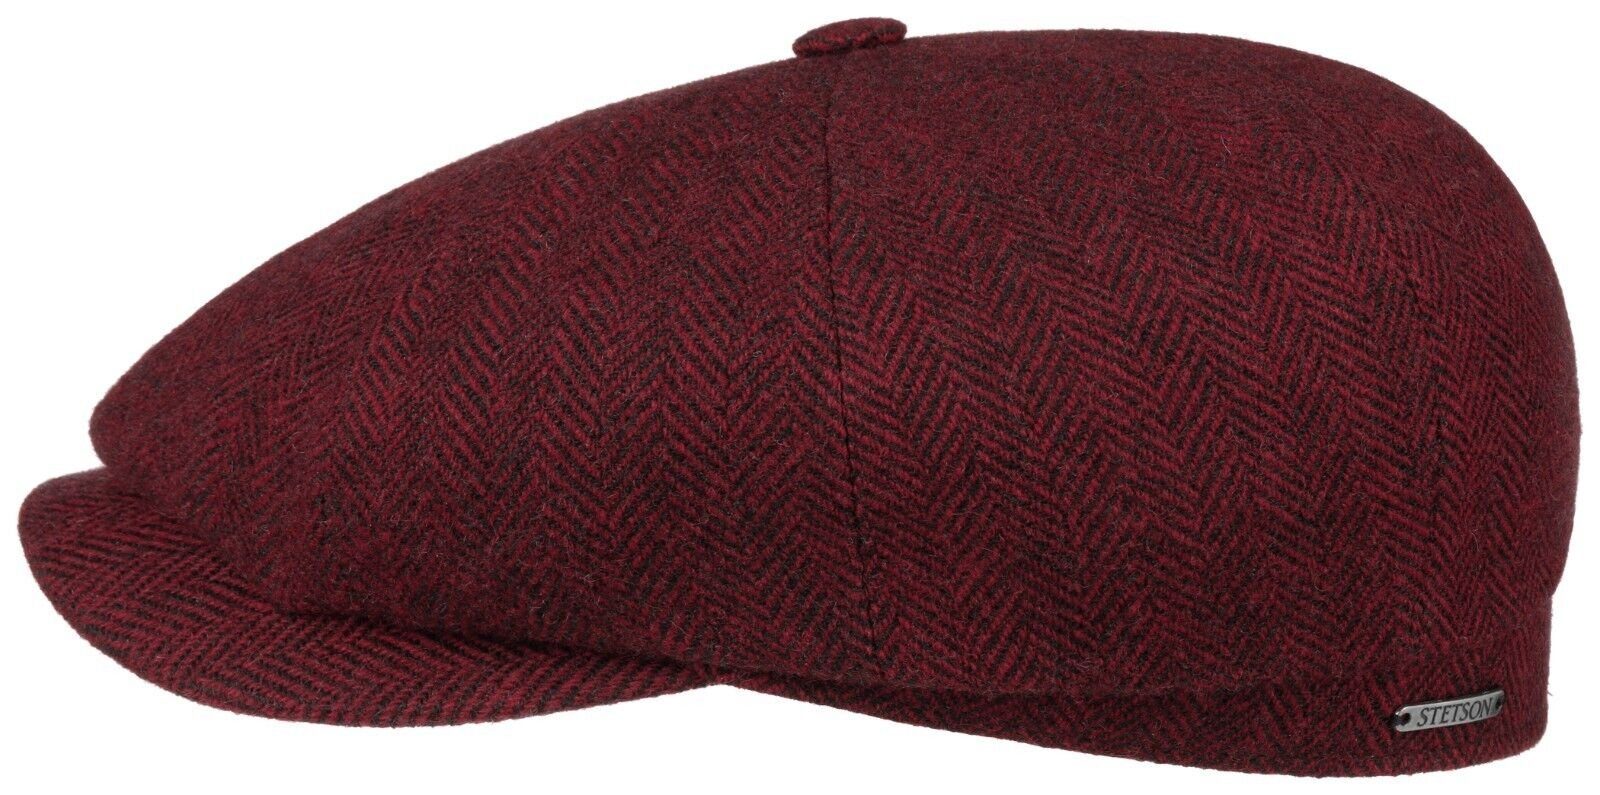 Stetson Ballonmütze Hatteras Classic Wool aus Wolle Rot